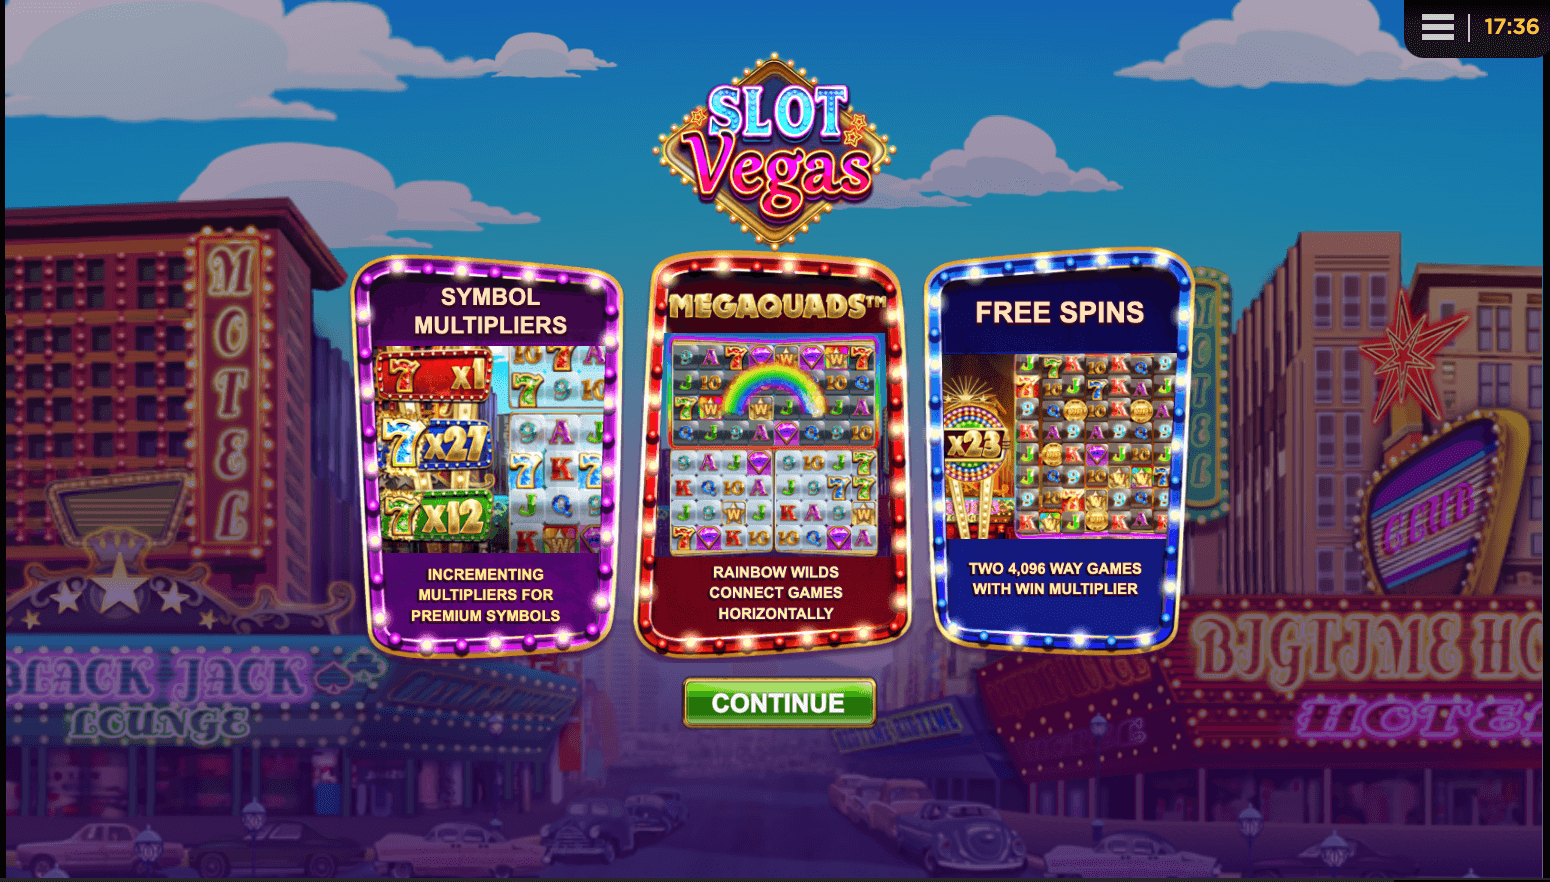 Slot Vegas Megaquads-Hintergrundbild